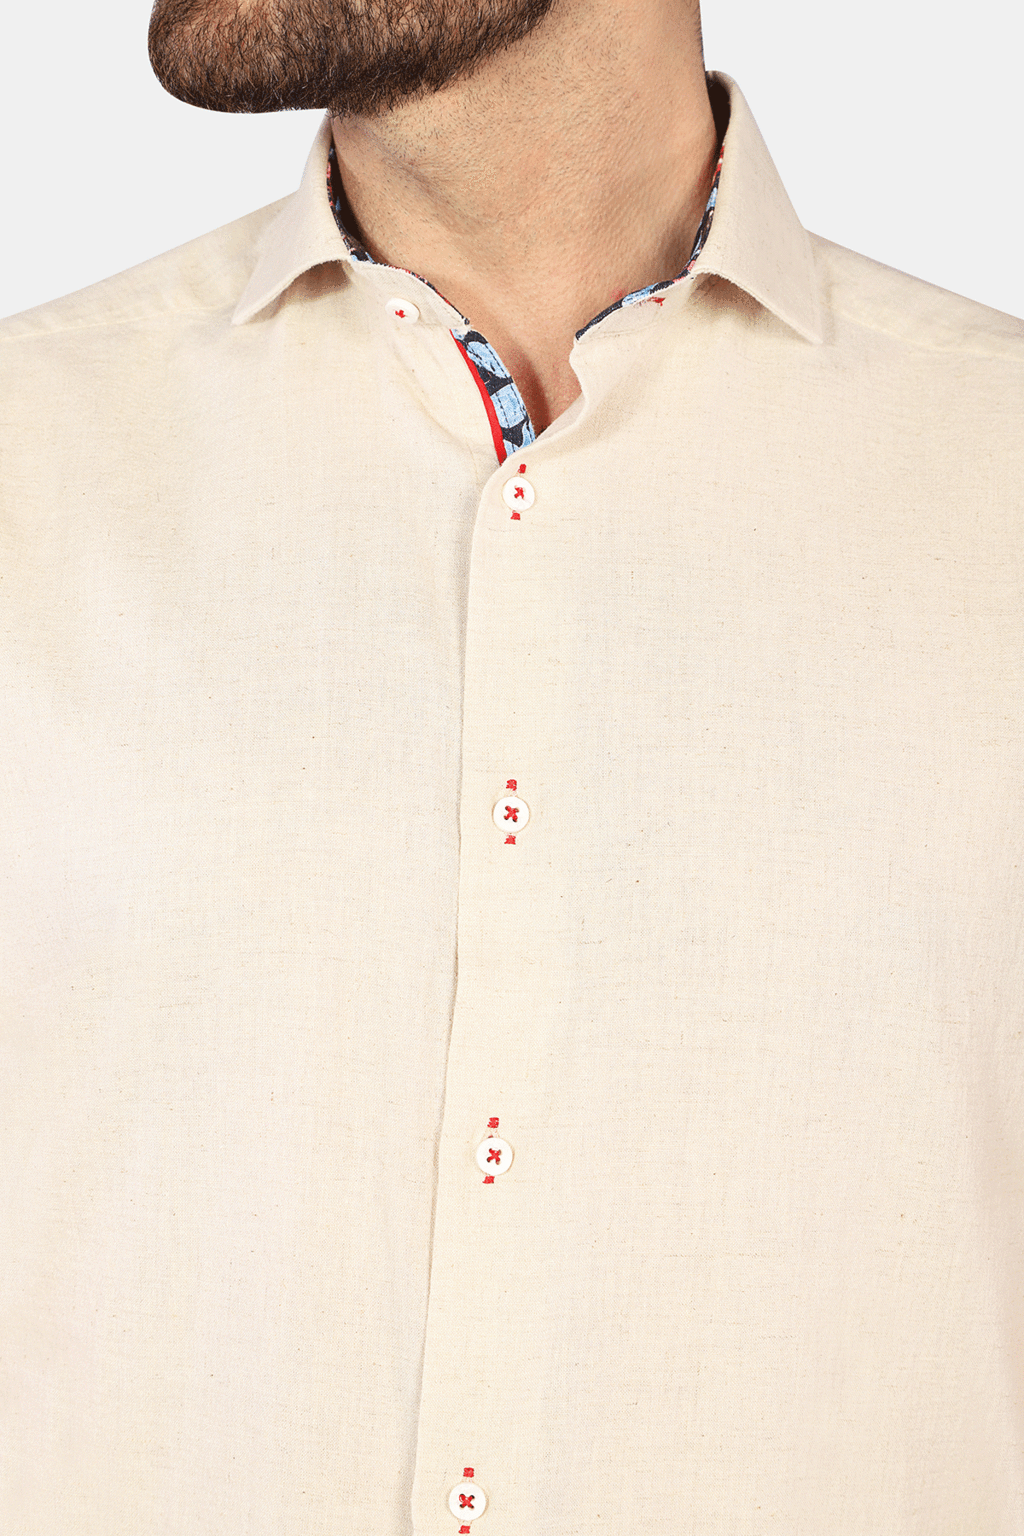 Beige linen short sleeve sport shirt. Contrasting collar and sleeve when flipped. 